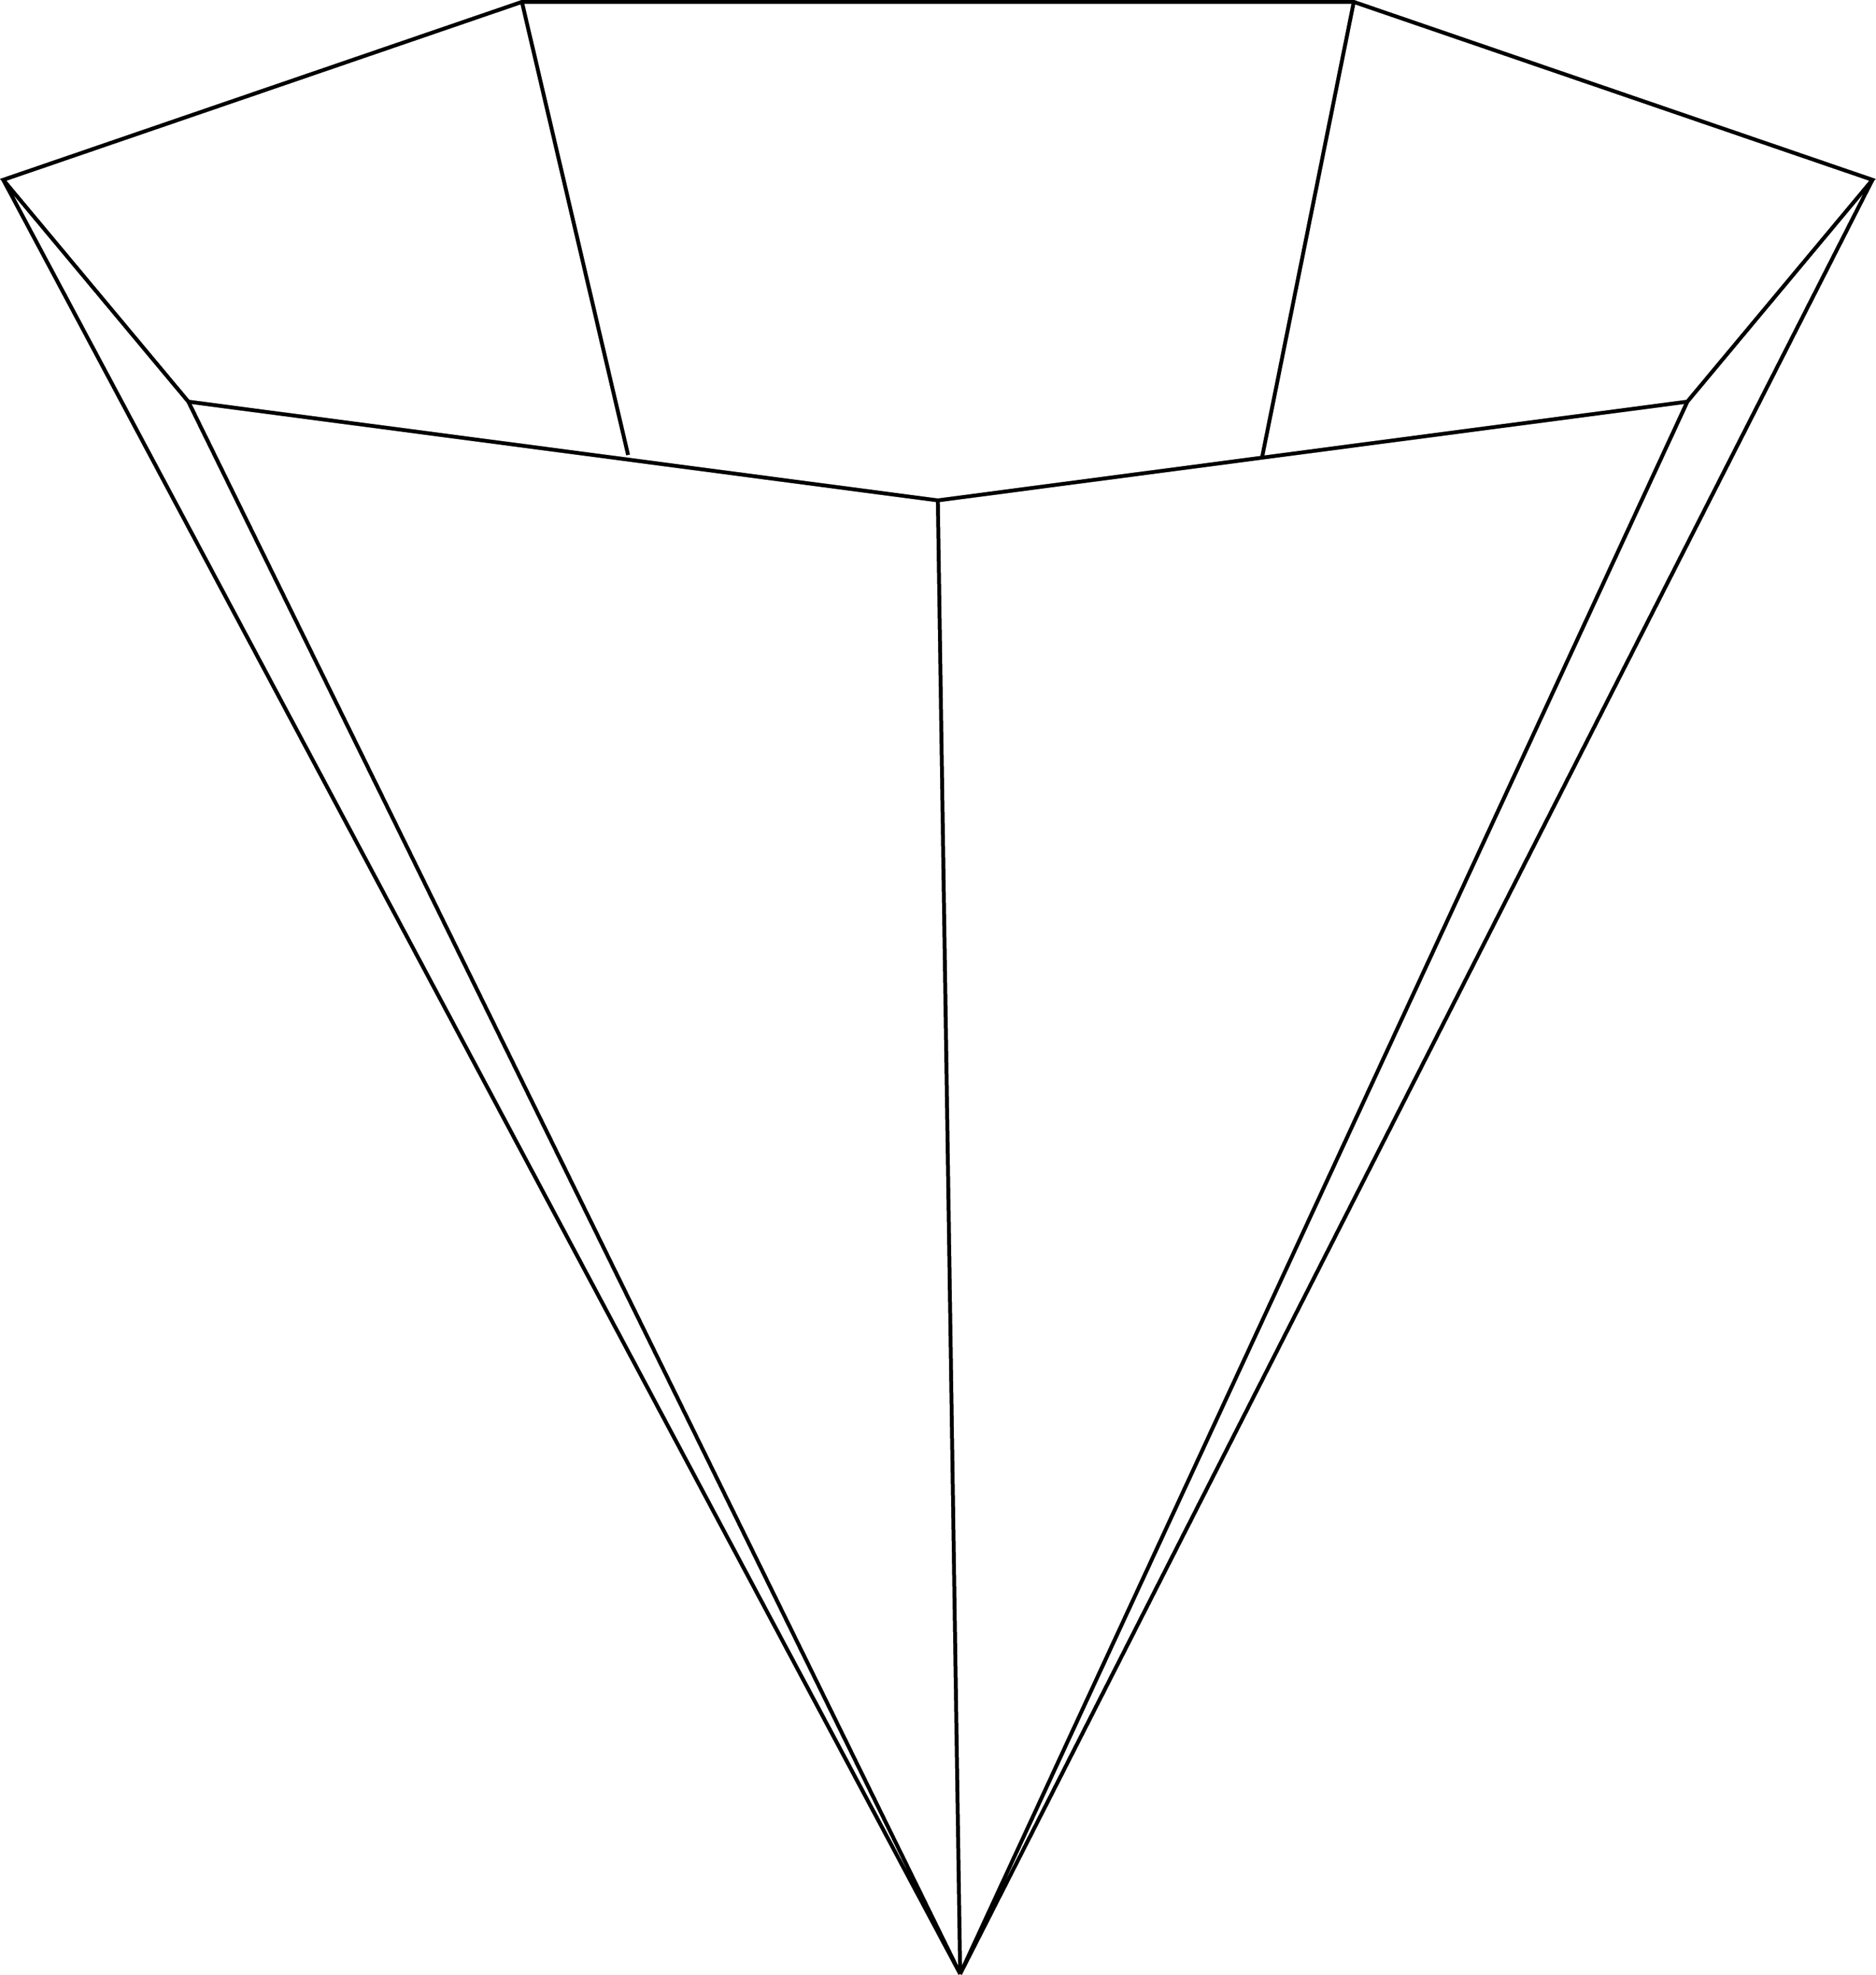 Inverted Septagonal/Heptagonal Pyramid | ClipArt ETC